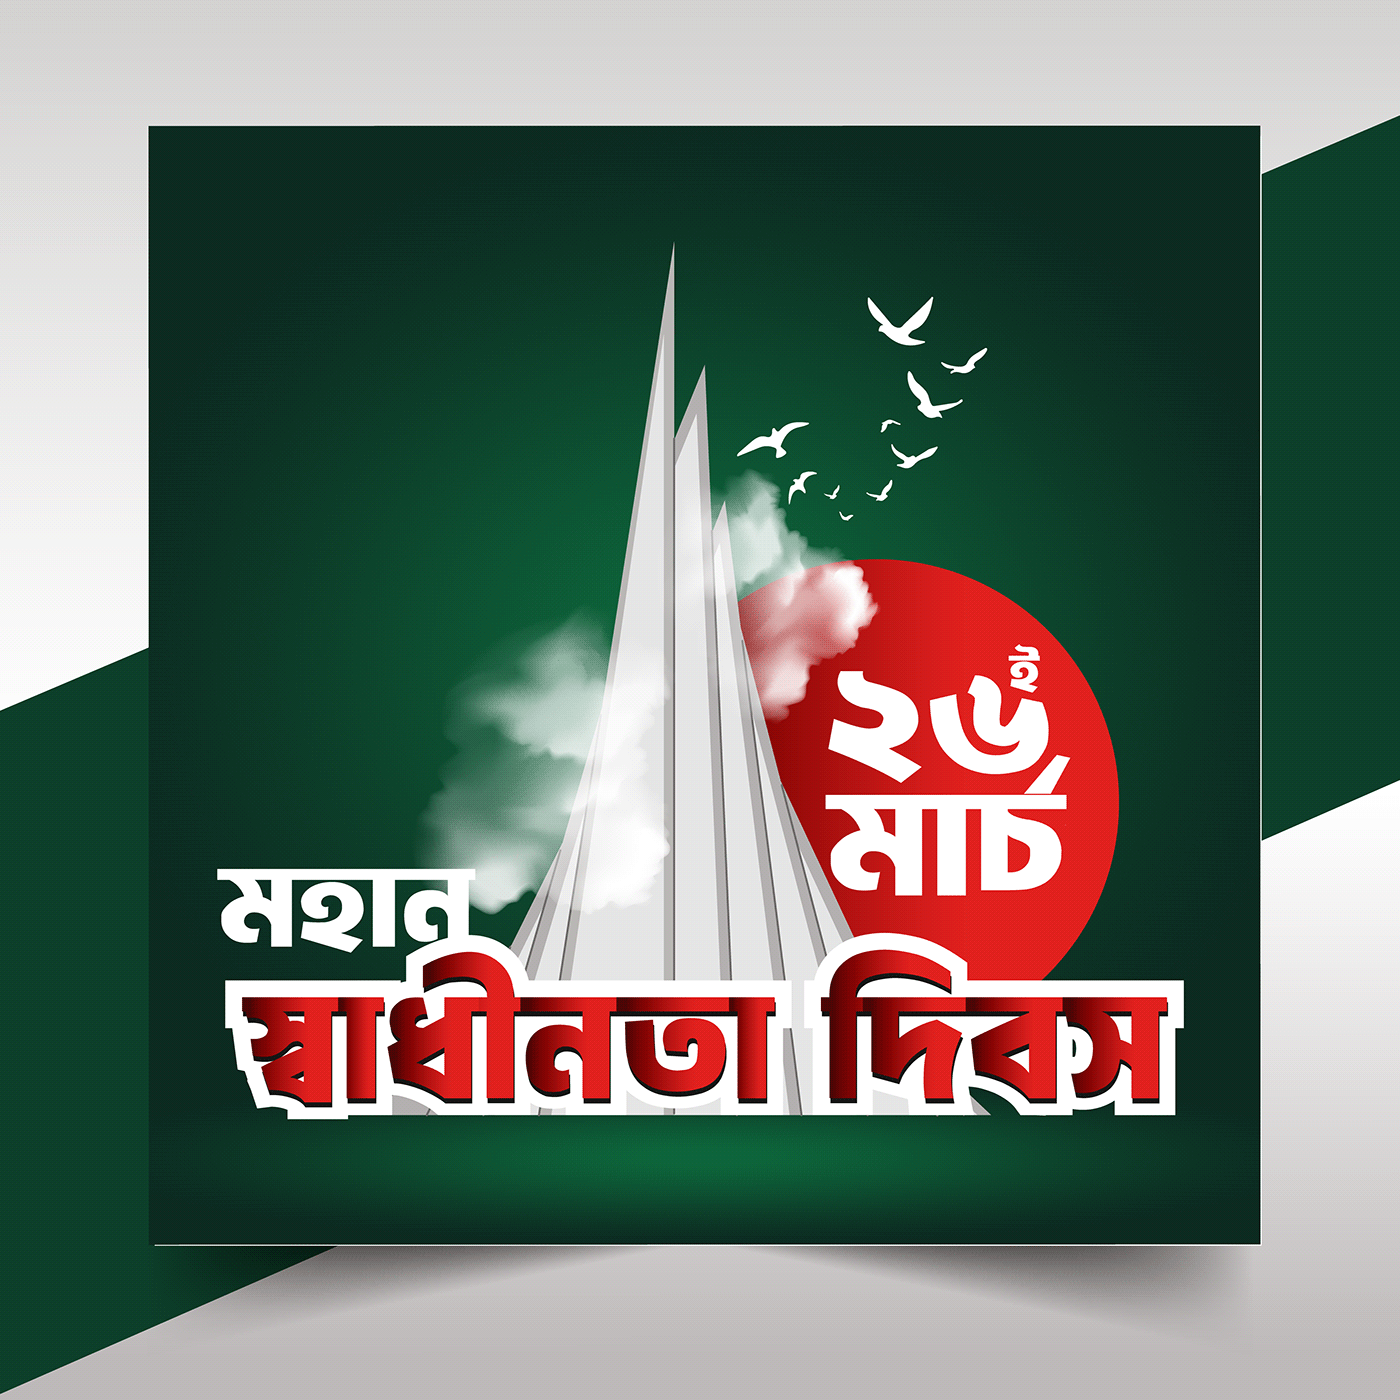 independence day Bangladesh Social media post sadhinota dibosh ২৬ মার্চ স্বাধীনতা দিবস মহান স্বাধীনতা দিবস 26 th March